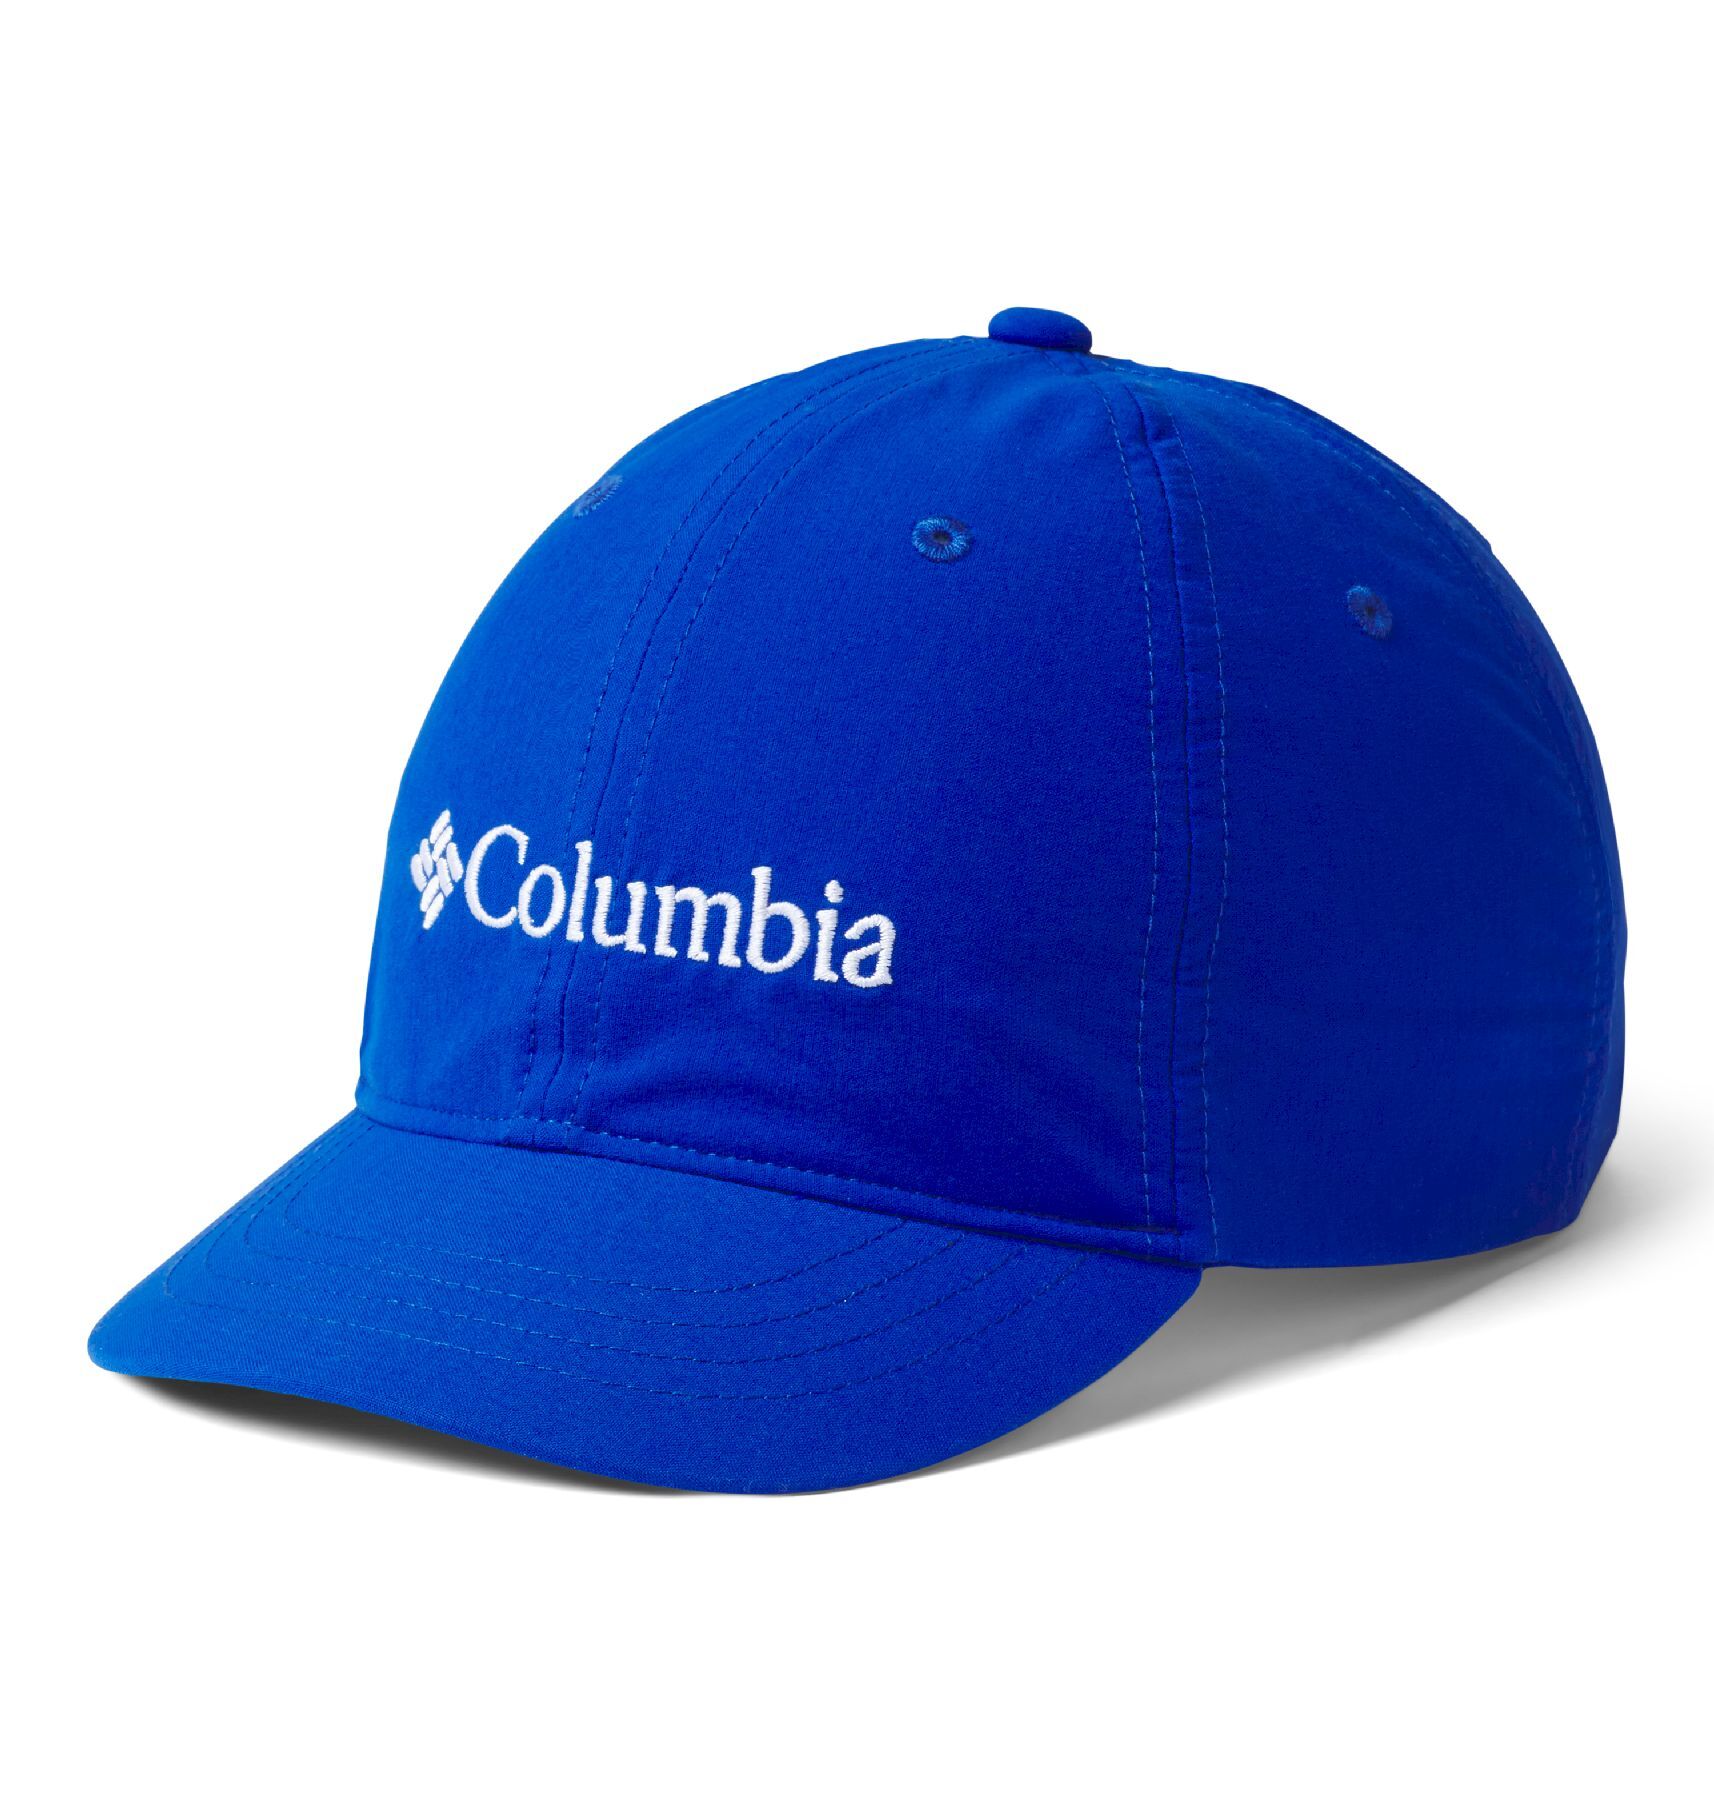 Columbia Youth Adjustable Ball Cap - Pet